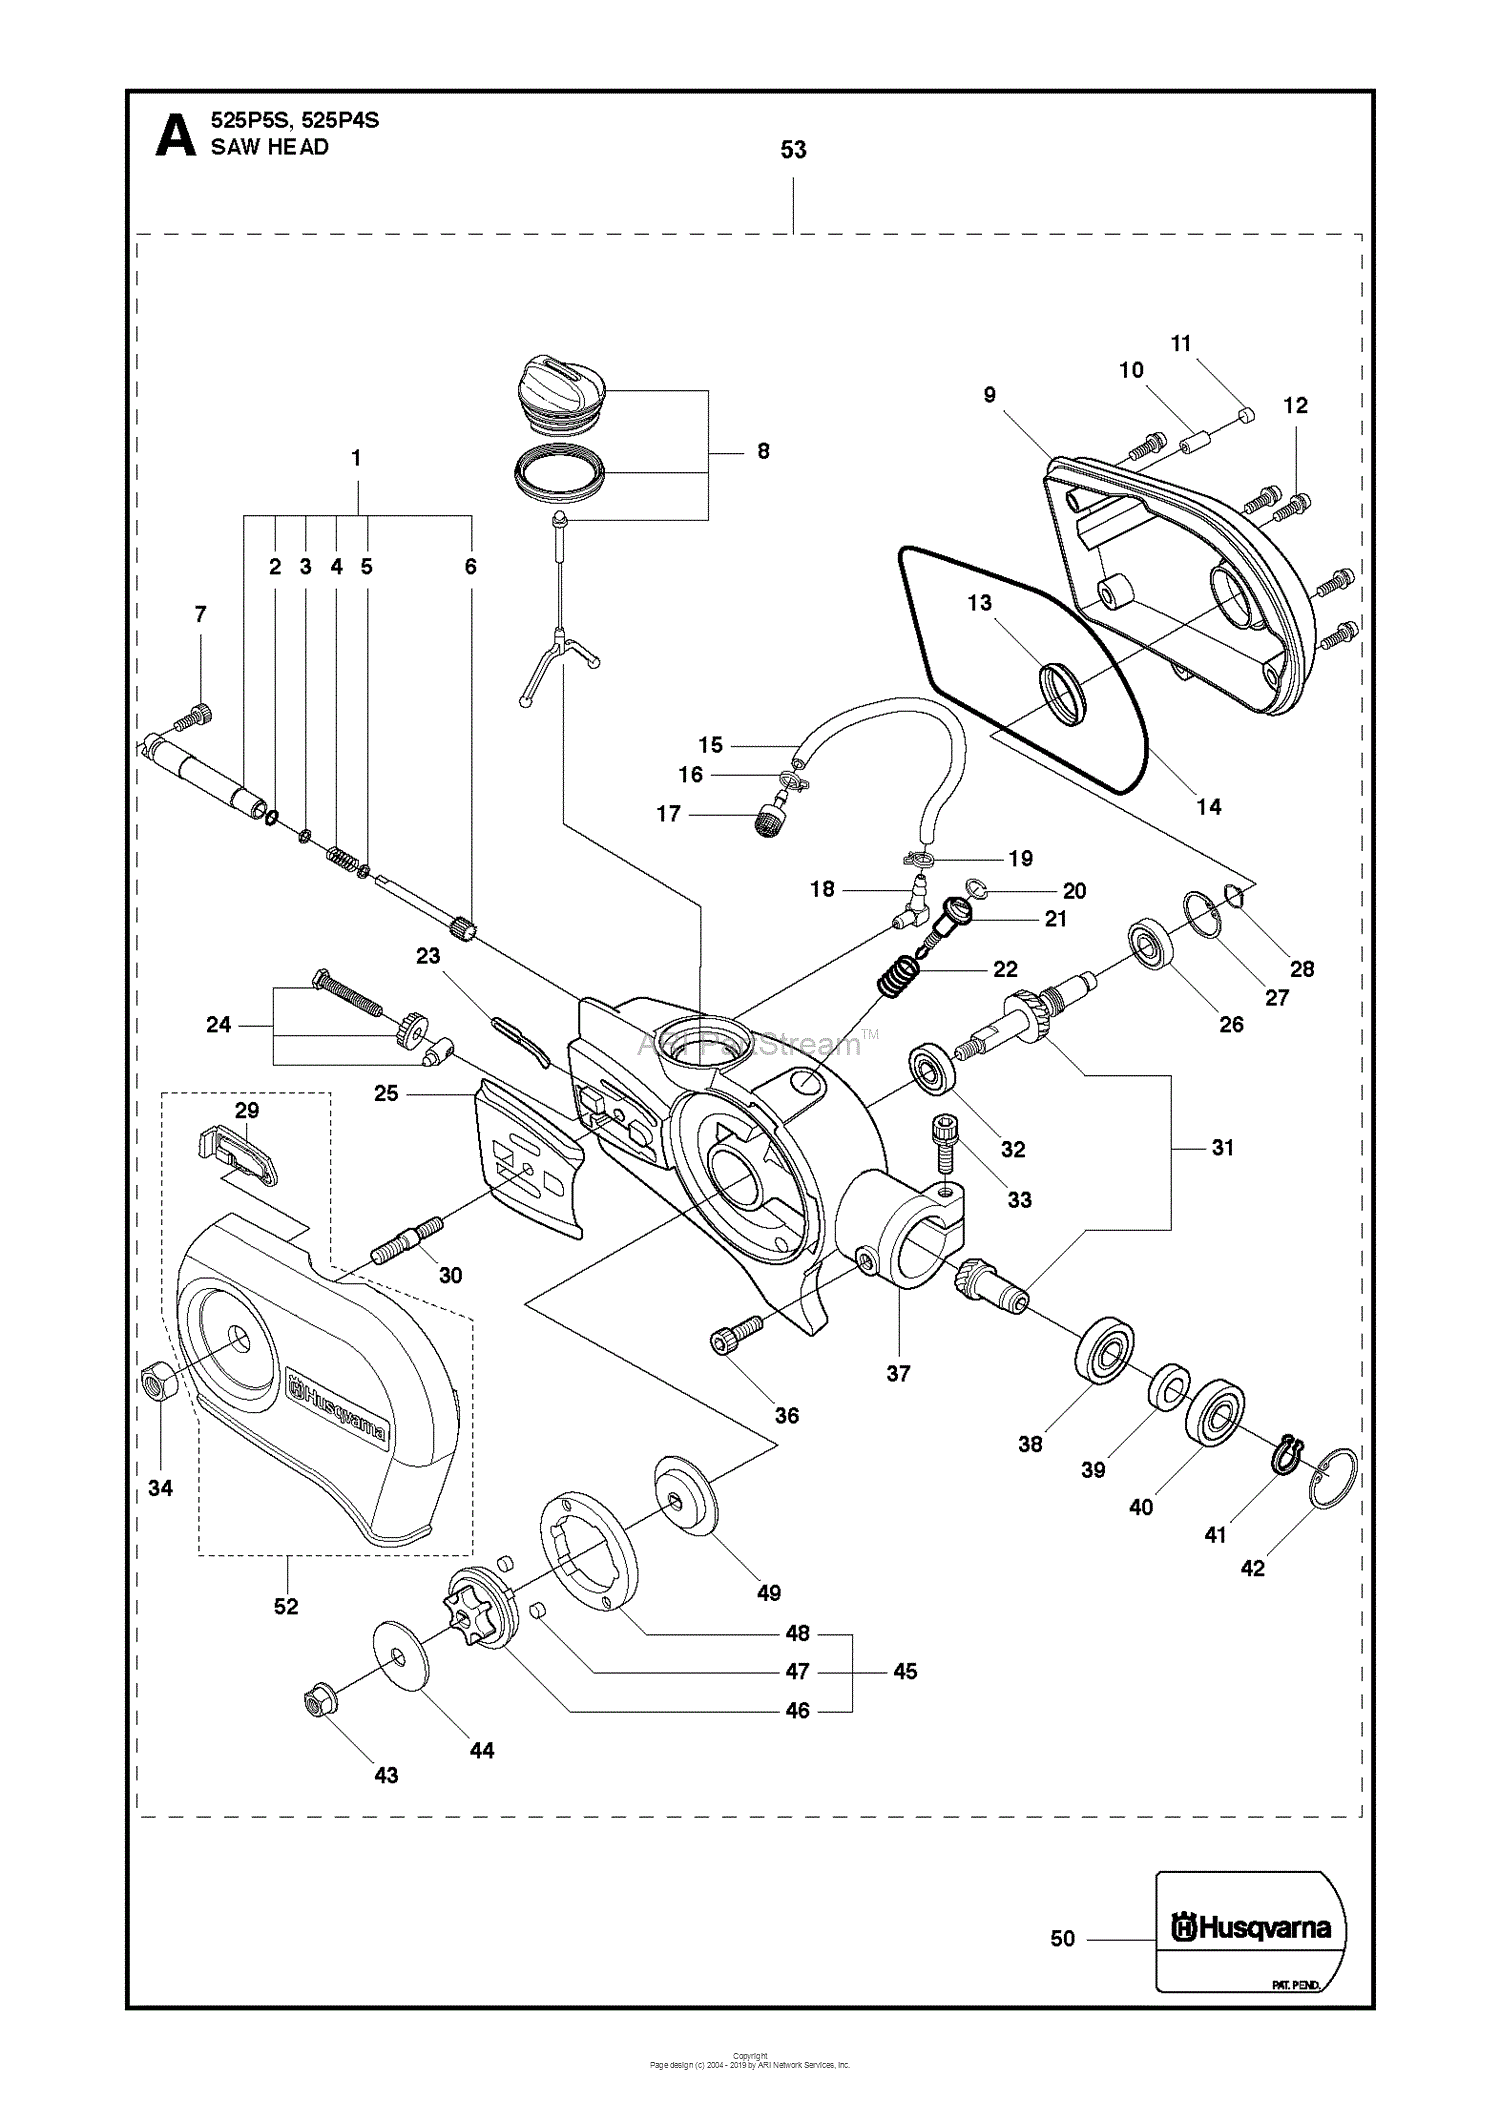 Husqvarna 525 P4s Parts Diagram For Saw Head